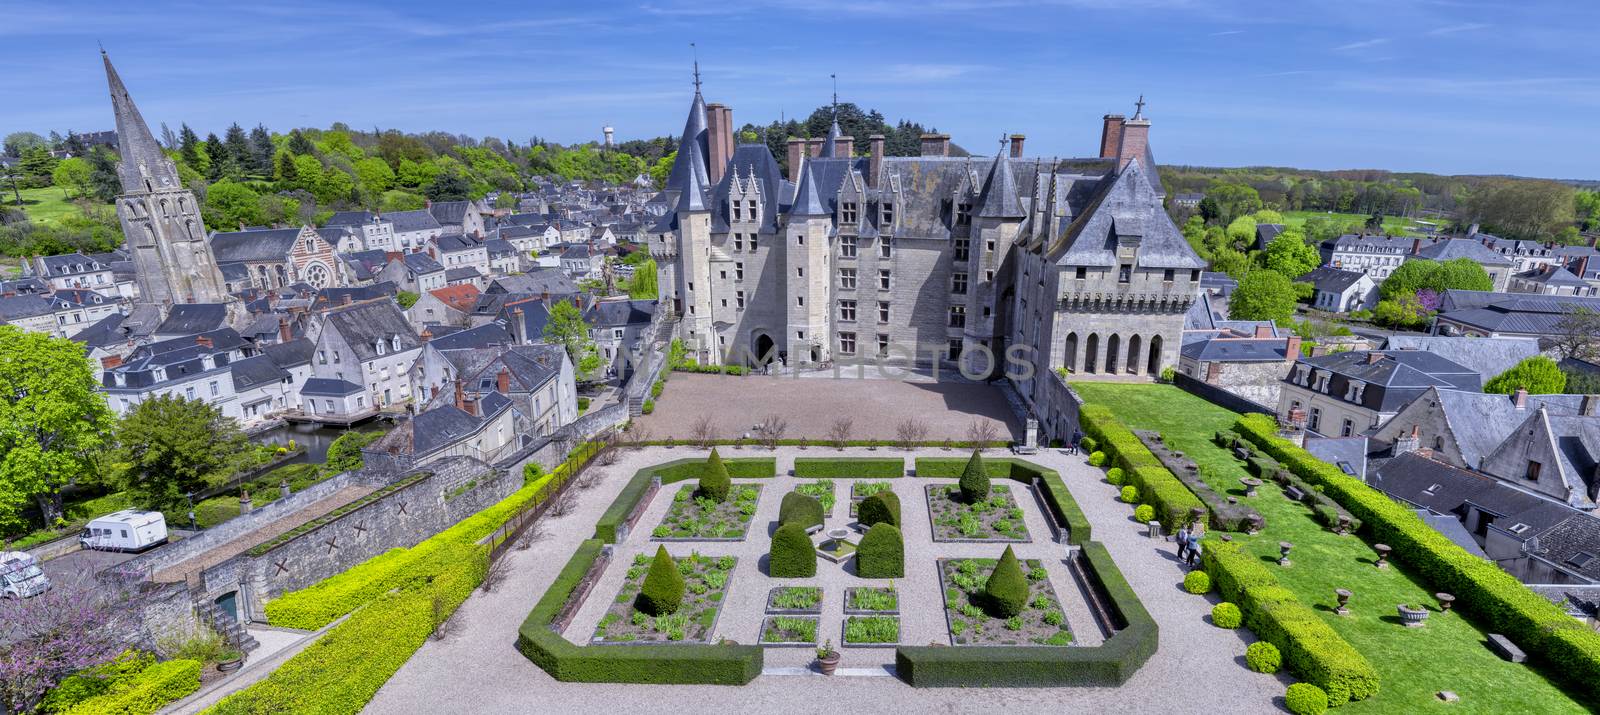 Langeais Castle with beautiful gardens, France. by CreativePhotoSpain